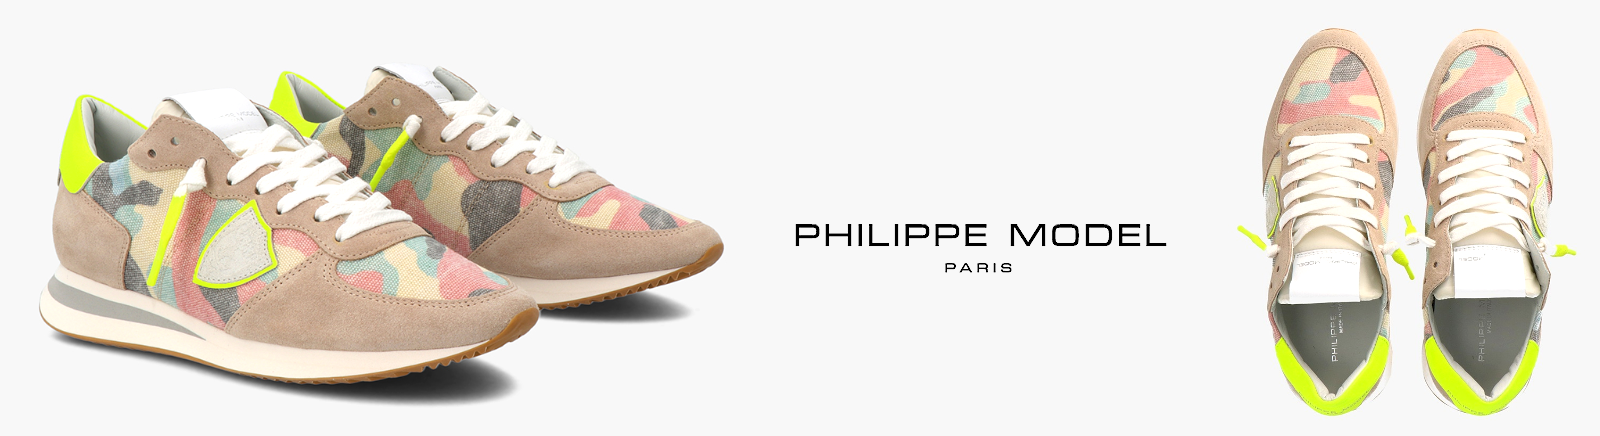 PHILIPPE MODEL Kinderschuhe online kaufen im GISY Schuhe Shop